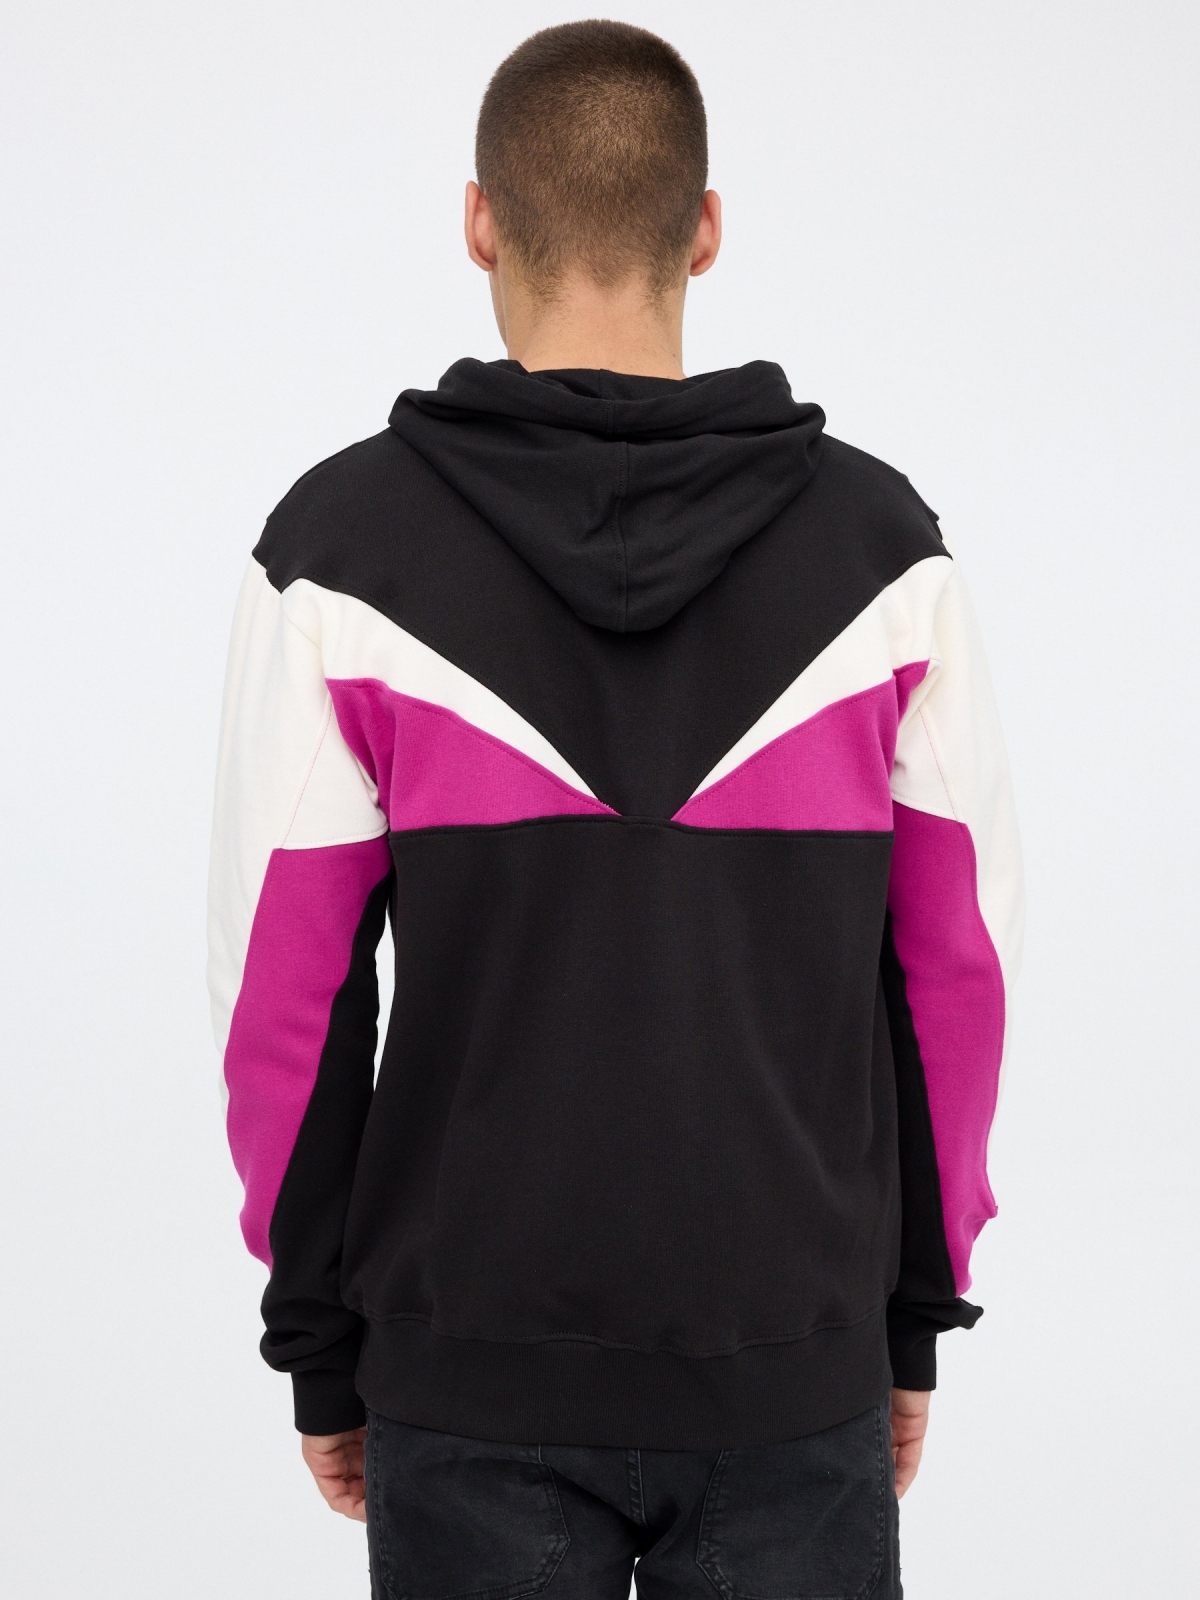 Zipper hooded sweatshirt black middle back view